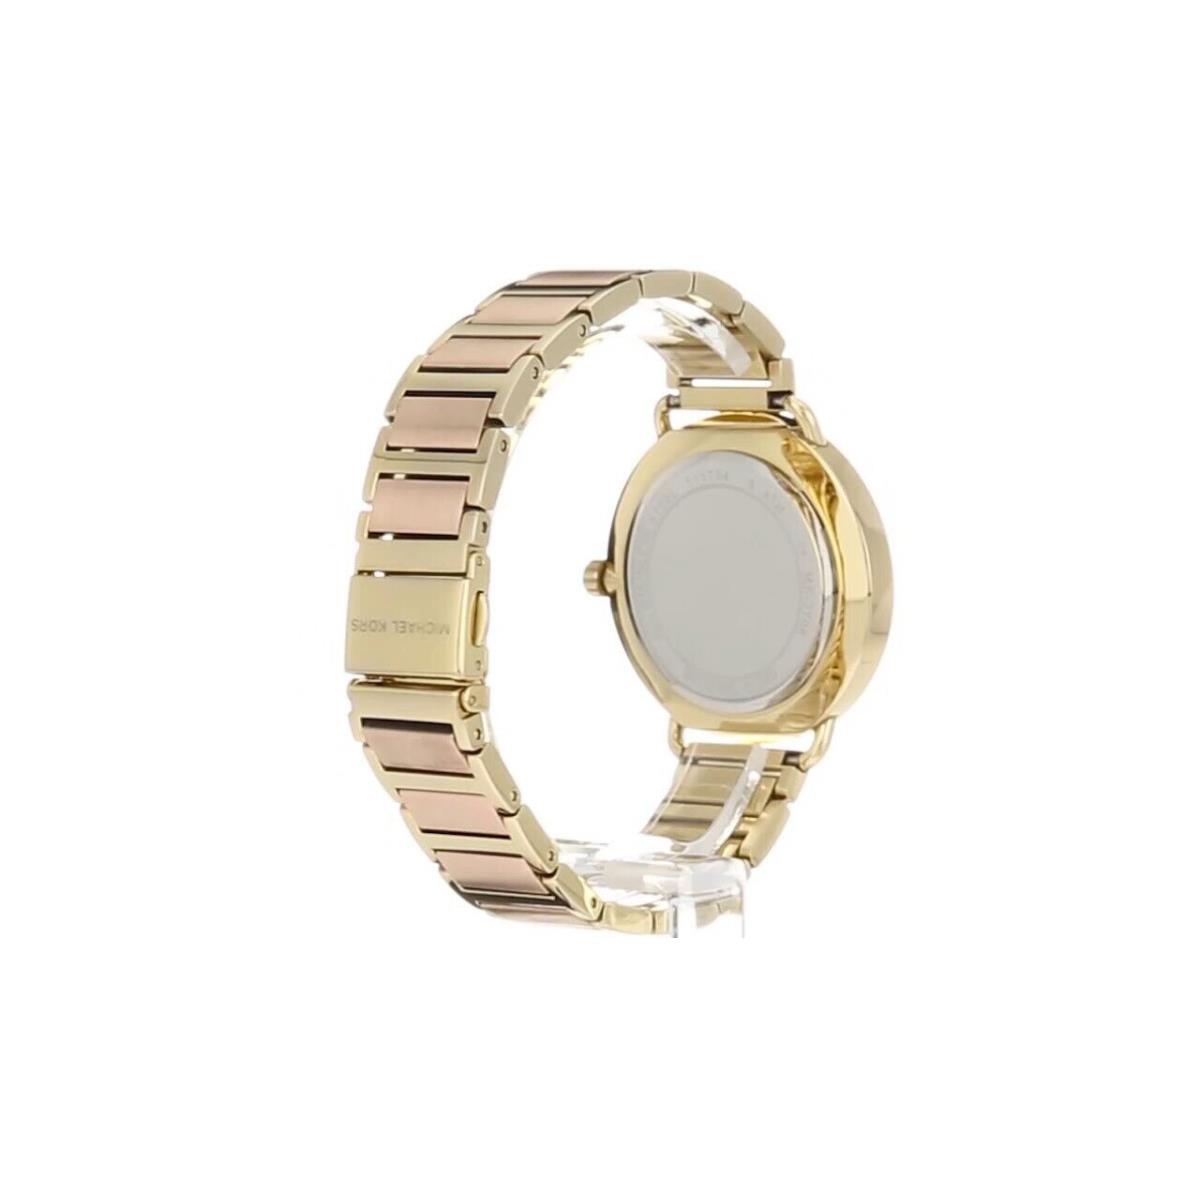 Michael Kors Portia Gold+rose Gold 2 Tone Pave Slim Bracelet Watch MK3706 - Gold Dial, ROSE GOLD Band